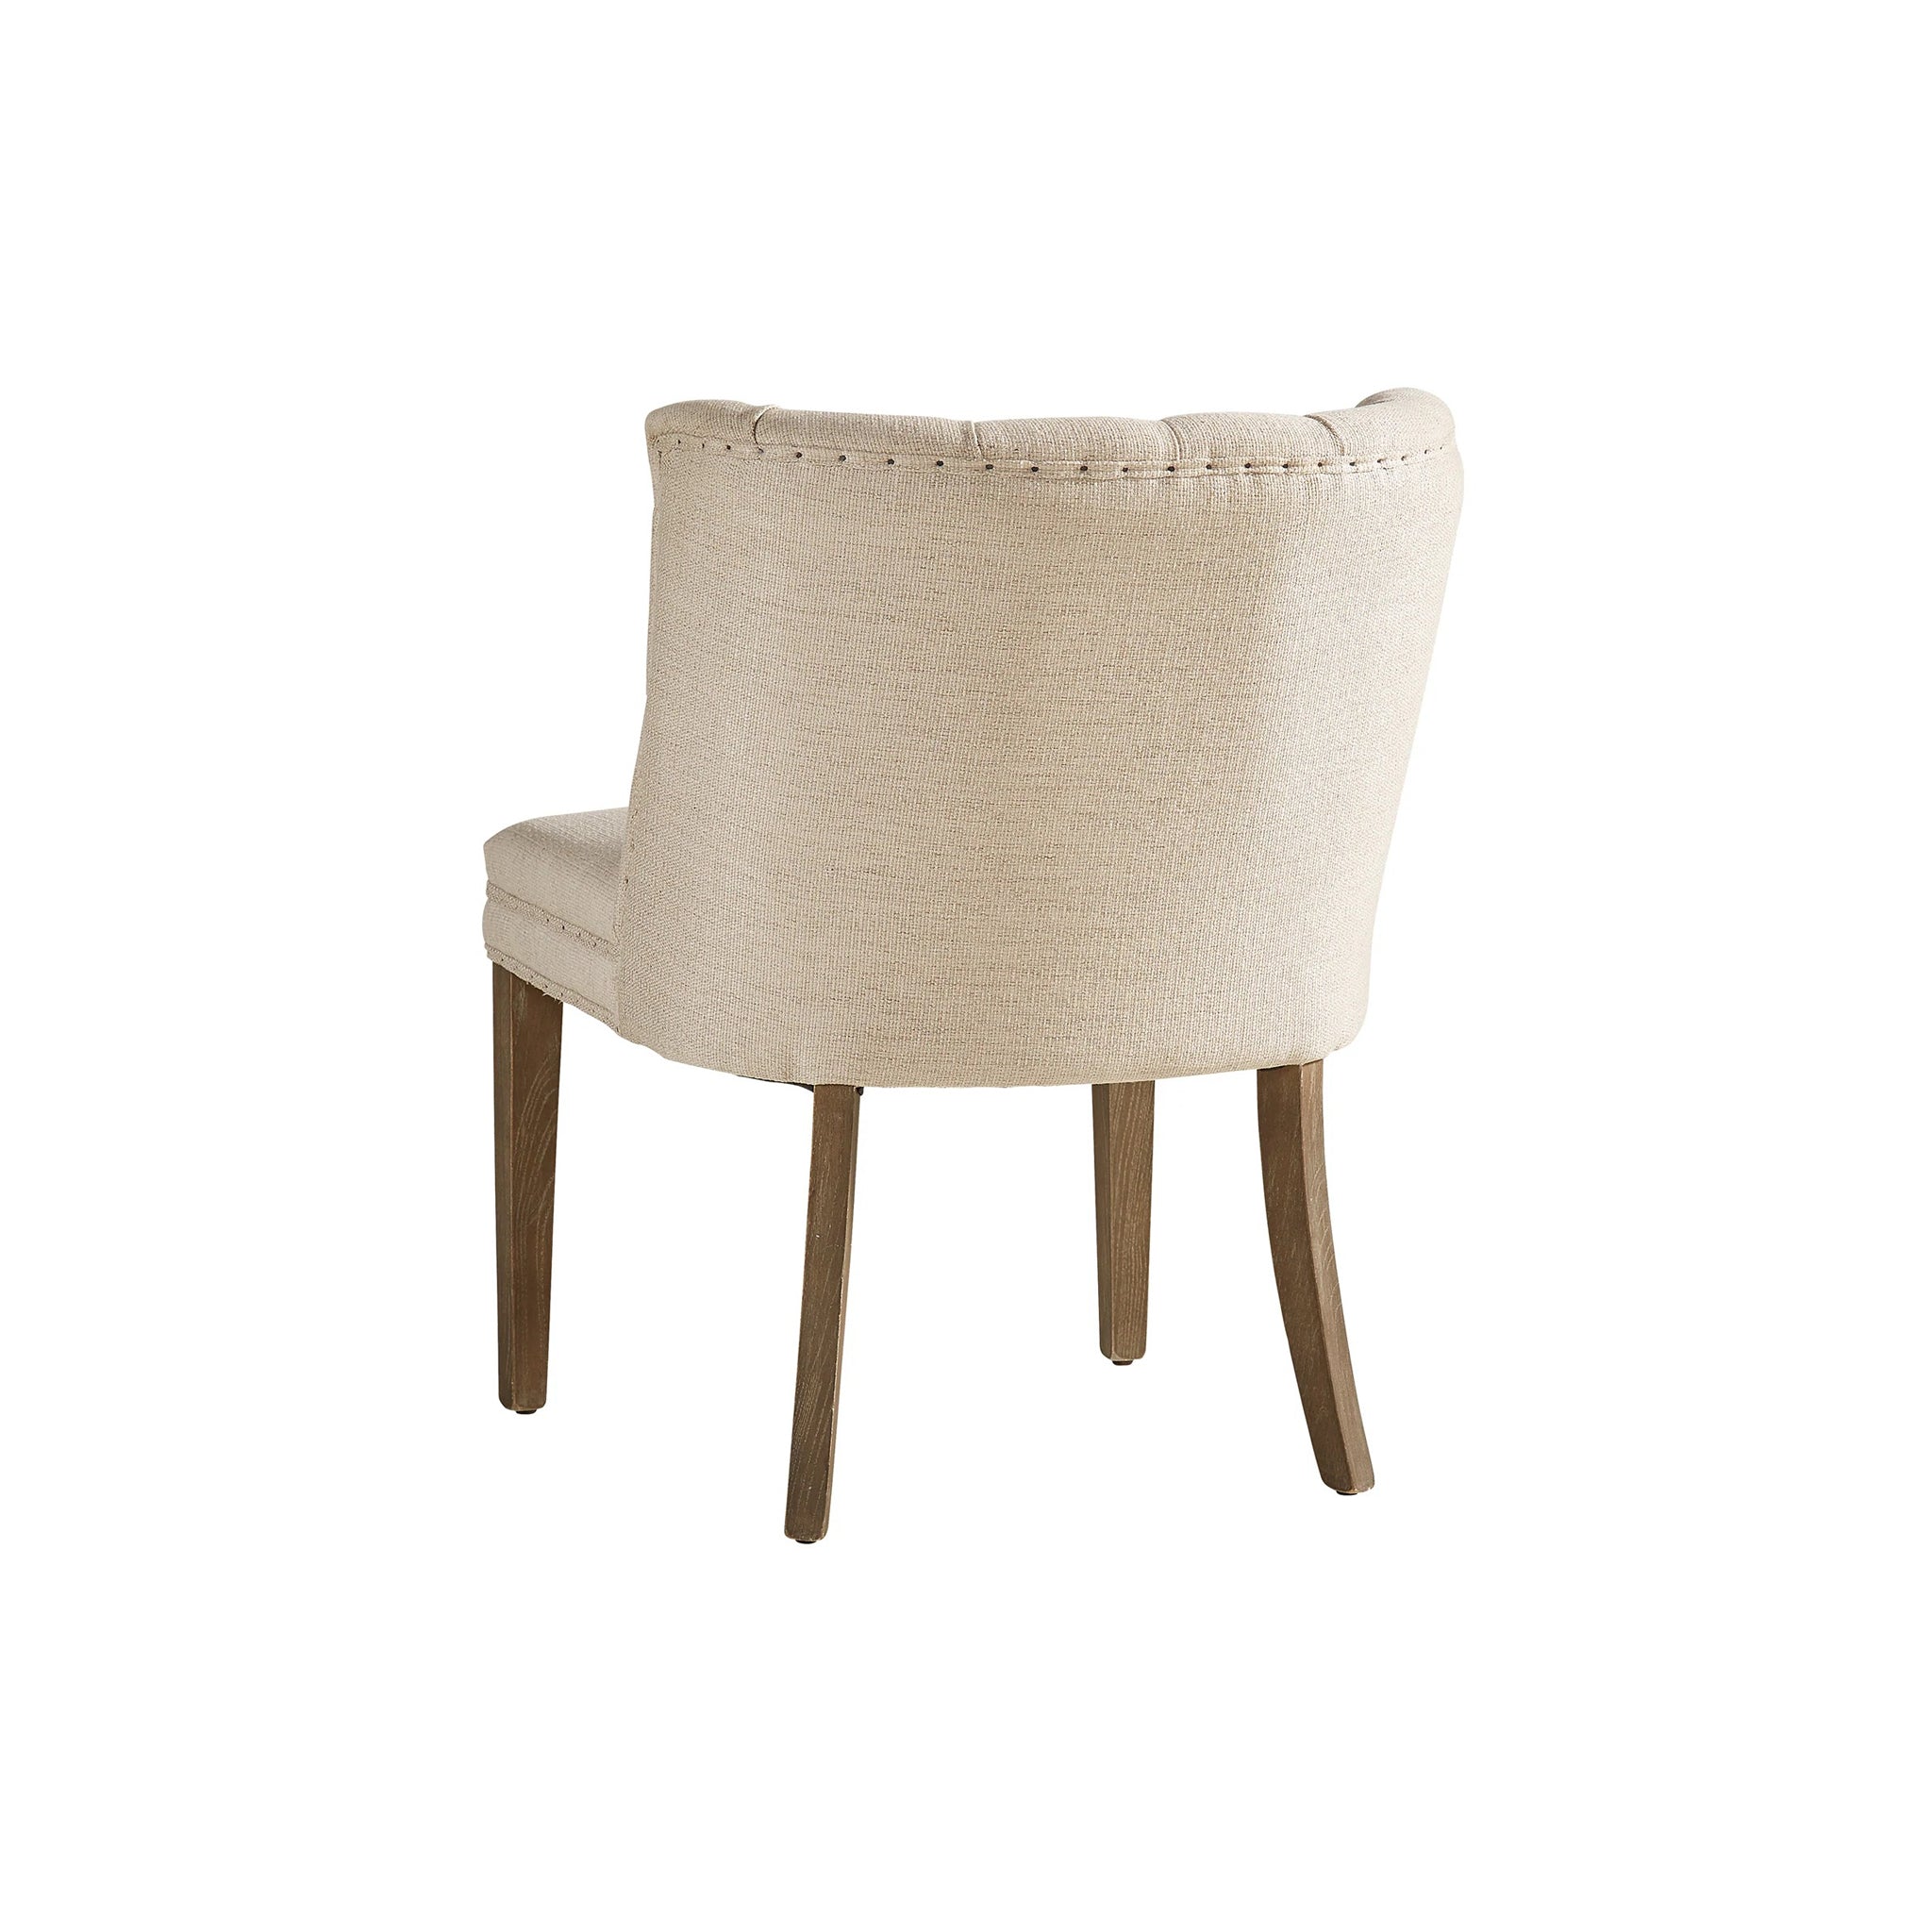 Tufted Linen and Oak Barrel Chair